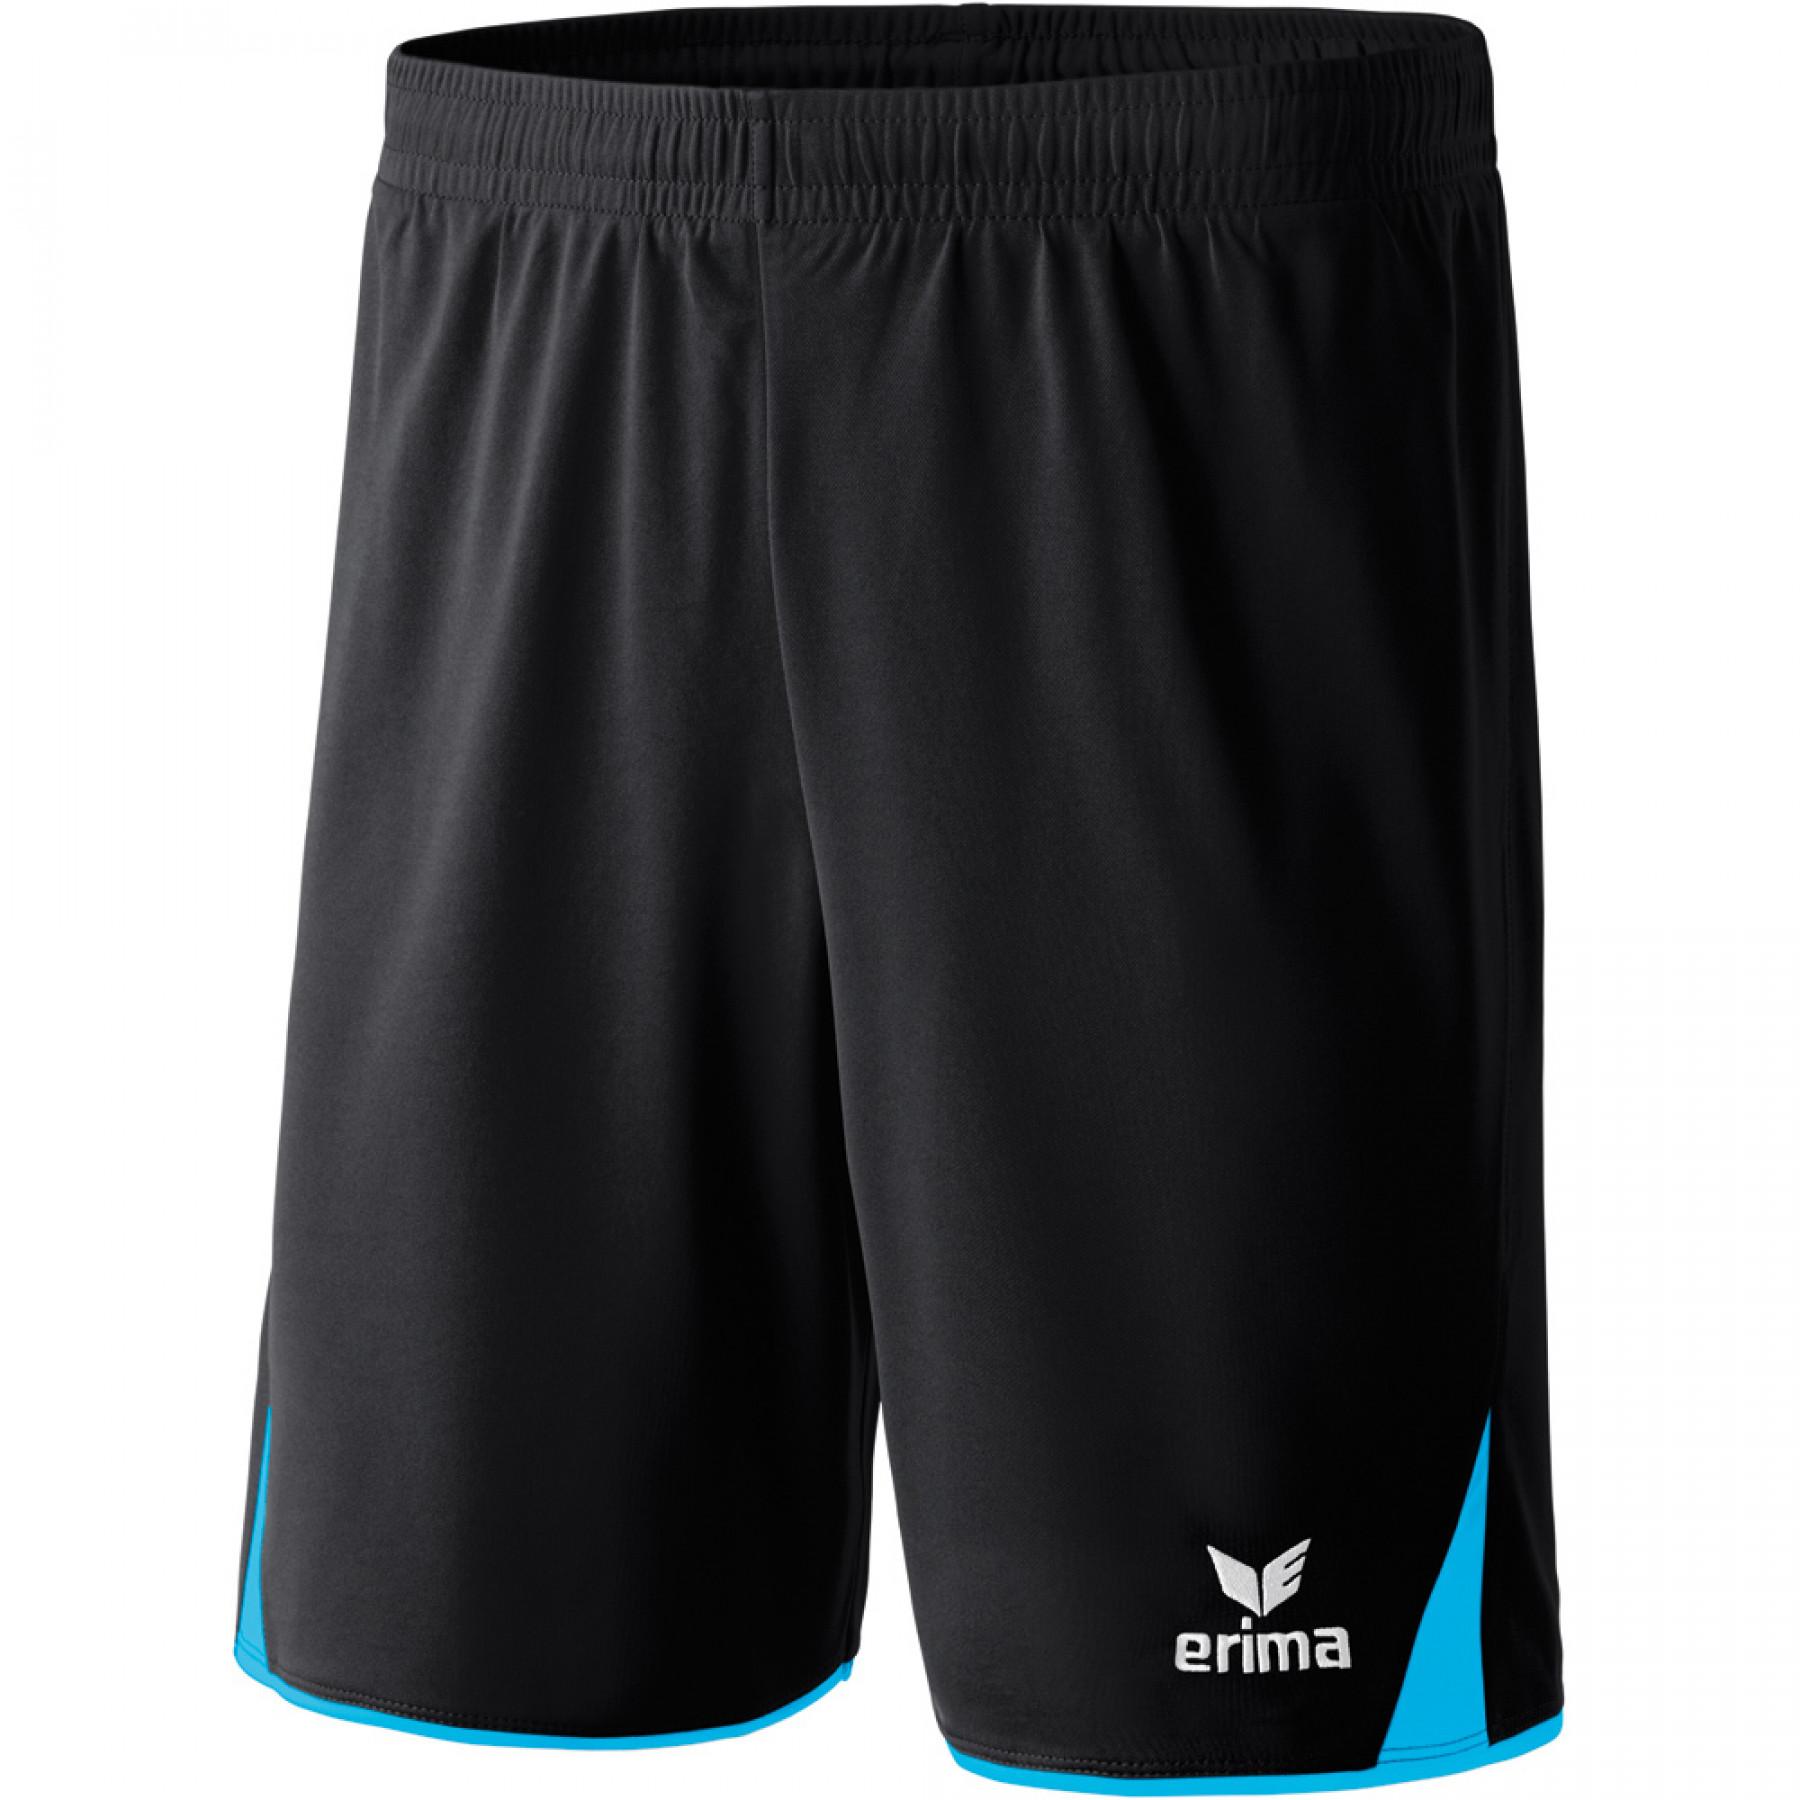 Children's shorts Erima 5-CUBES